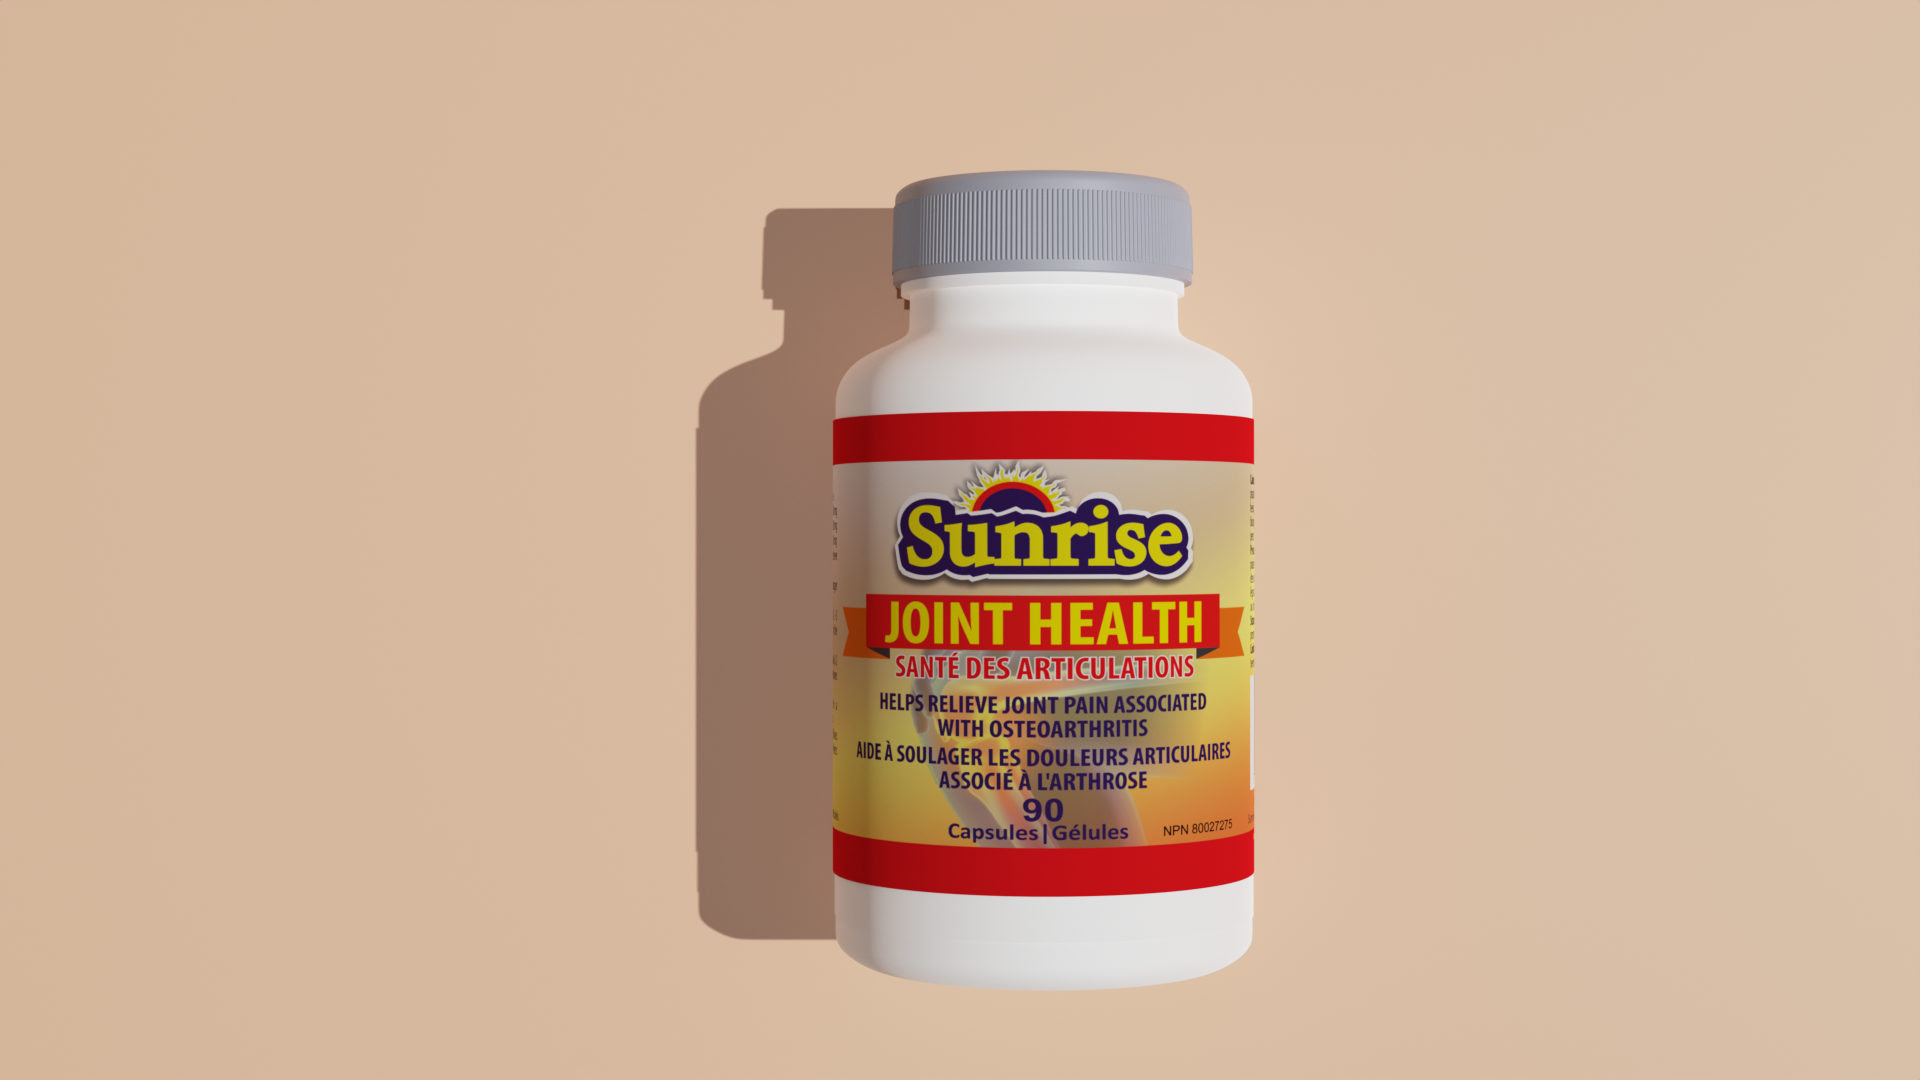 Sunrise Joint Health – Capsules